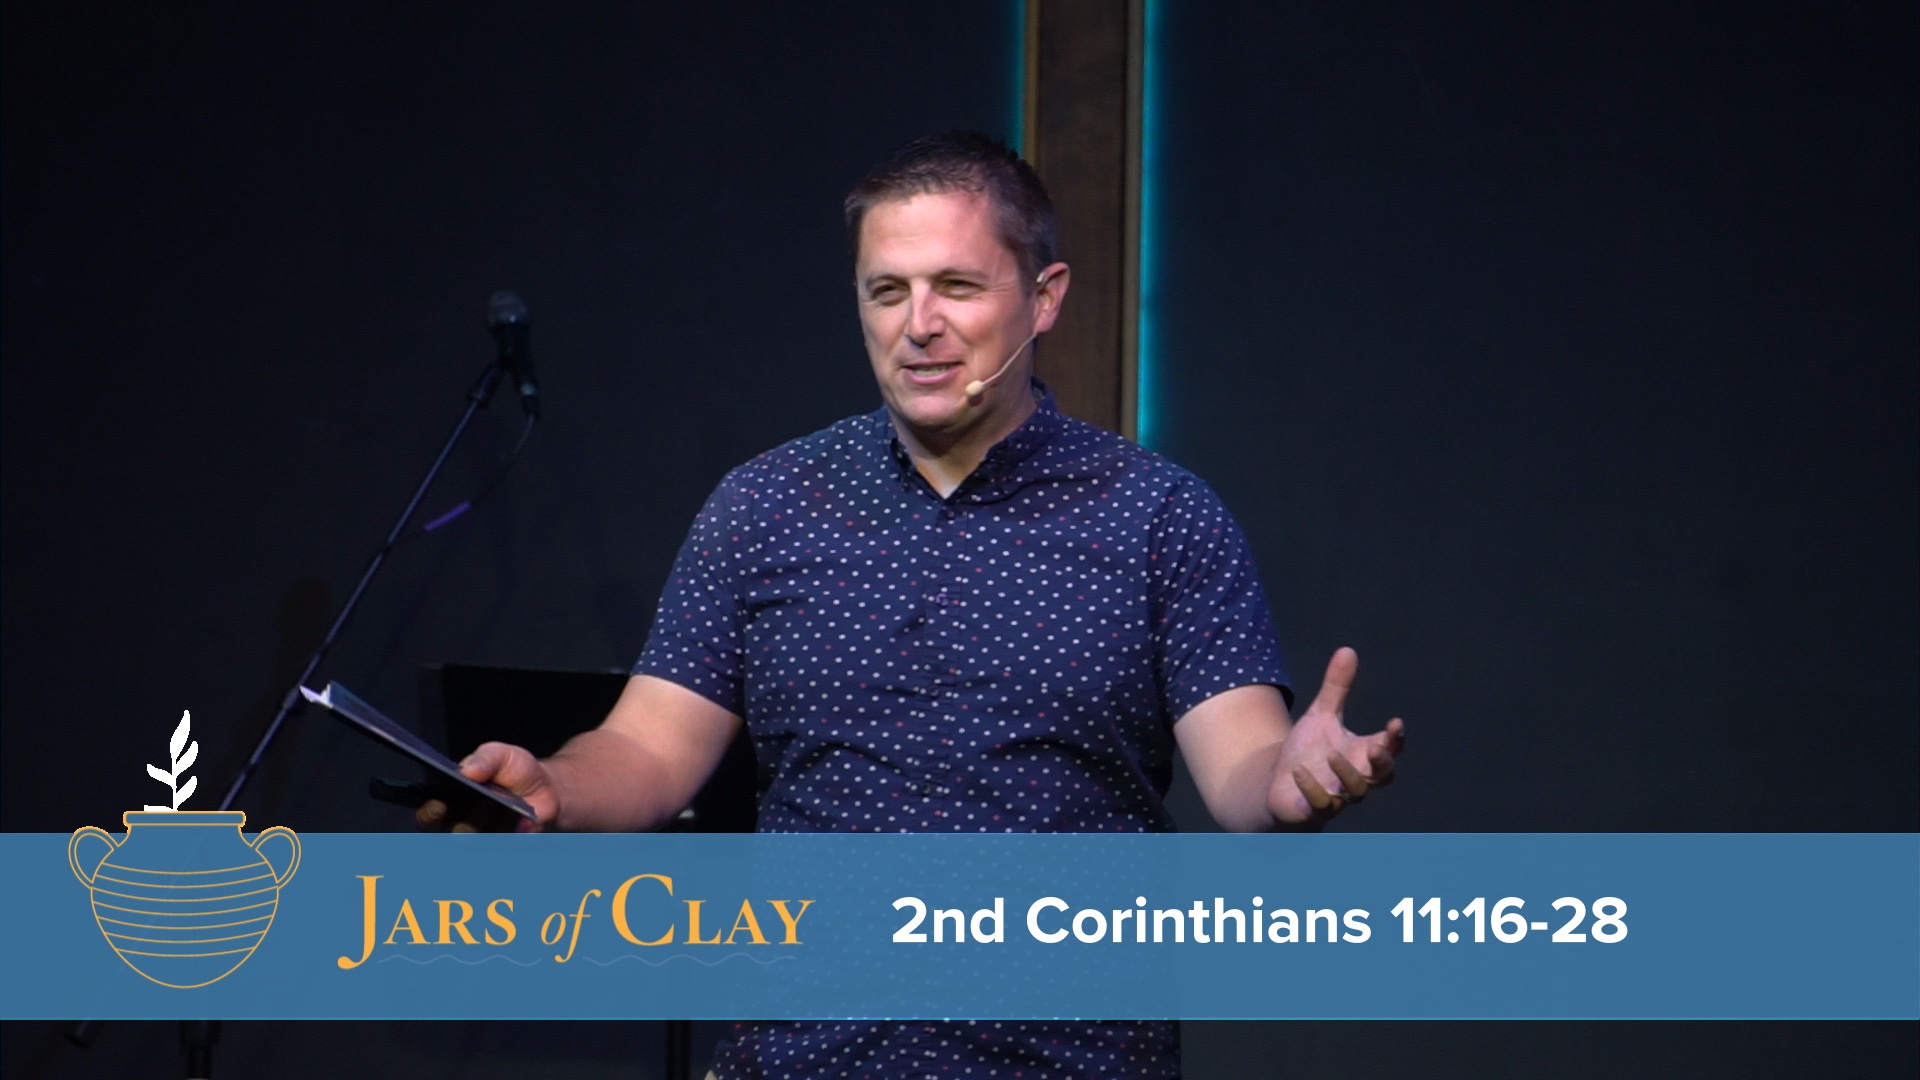 Jars of Clay: 2nd Corinthians 11:16-28